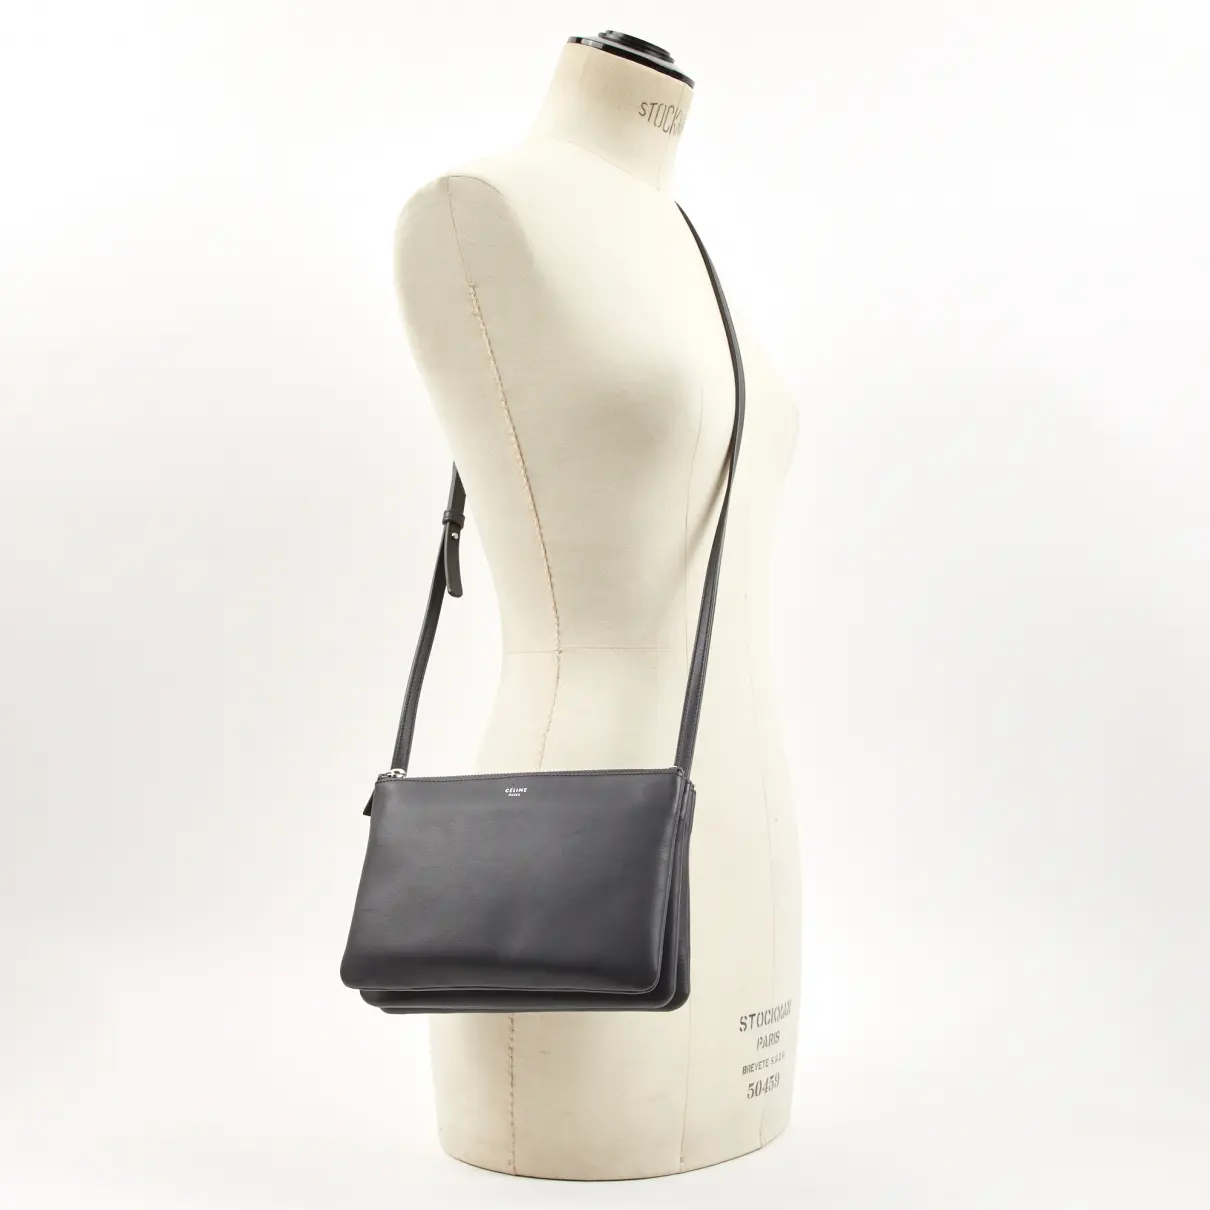 Buy Celine Trio leather crossbody bag online